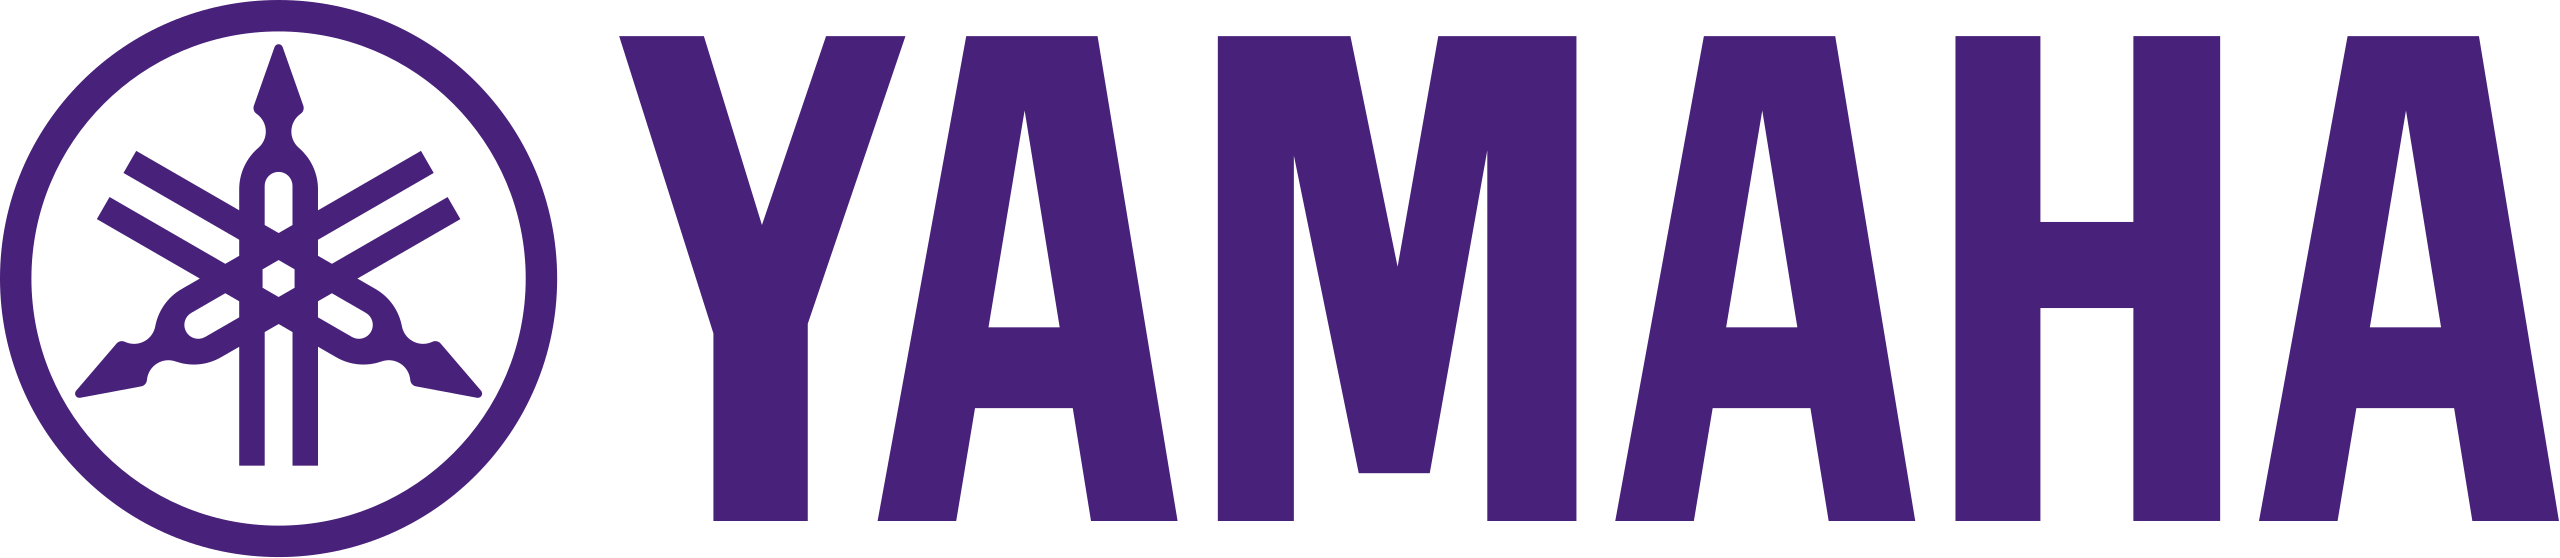 File:Yamaha logo.svg - Wikimedia Commons